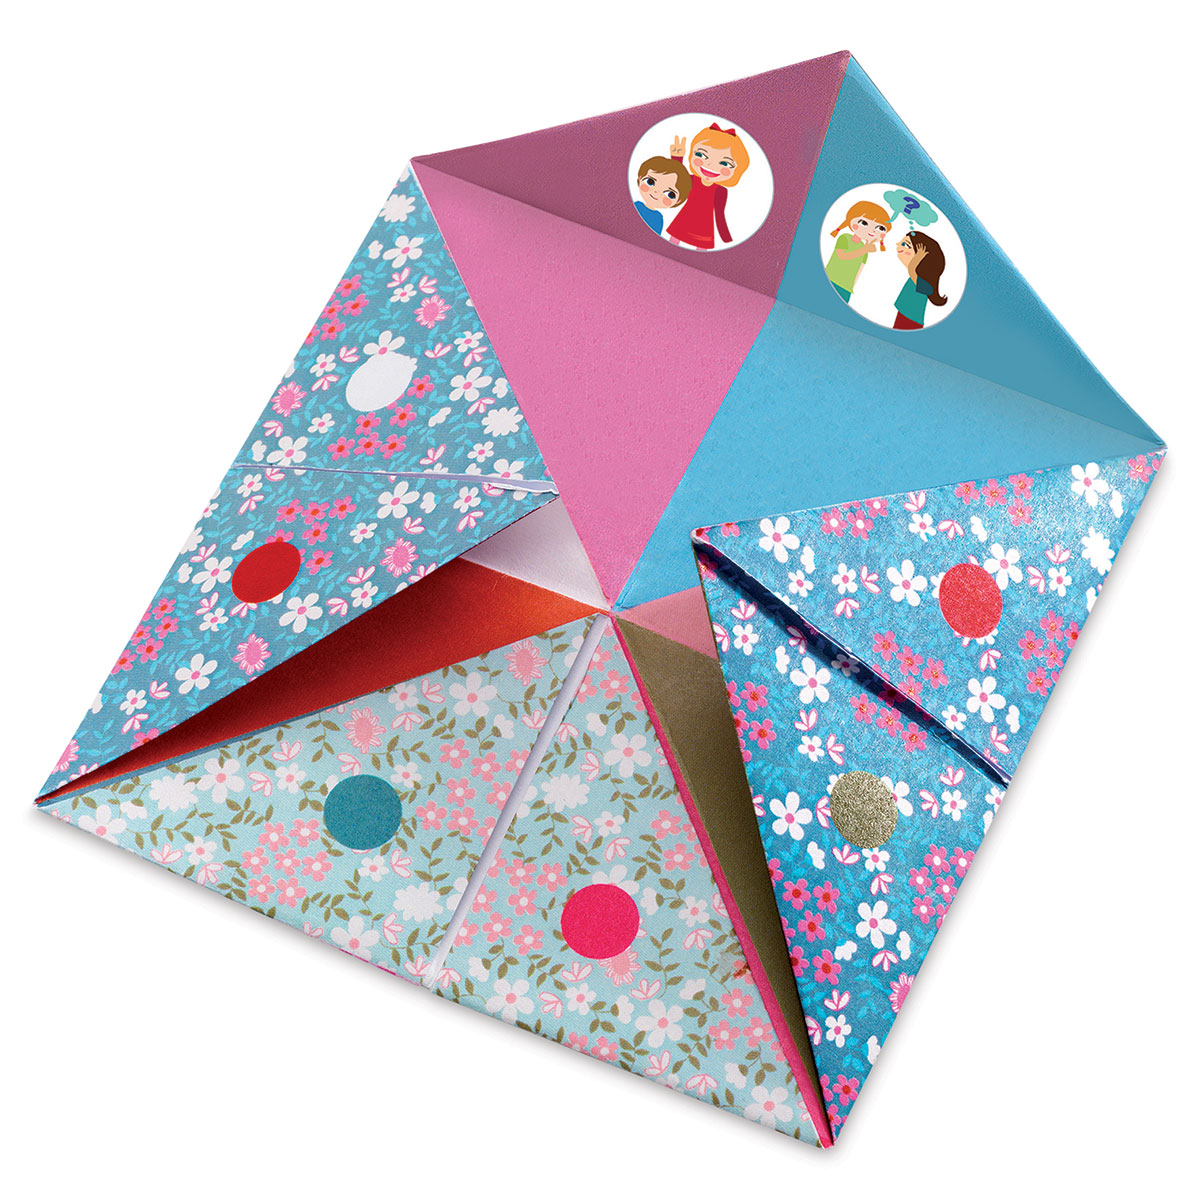 Djeco Origami Kit - Shivers